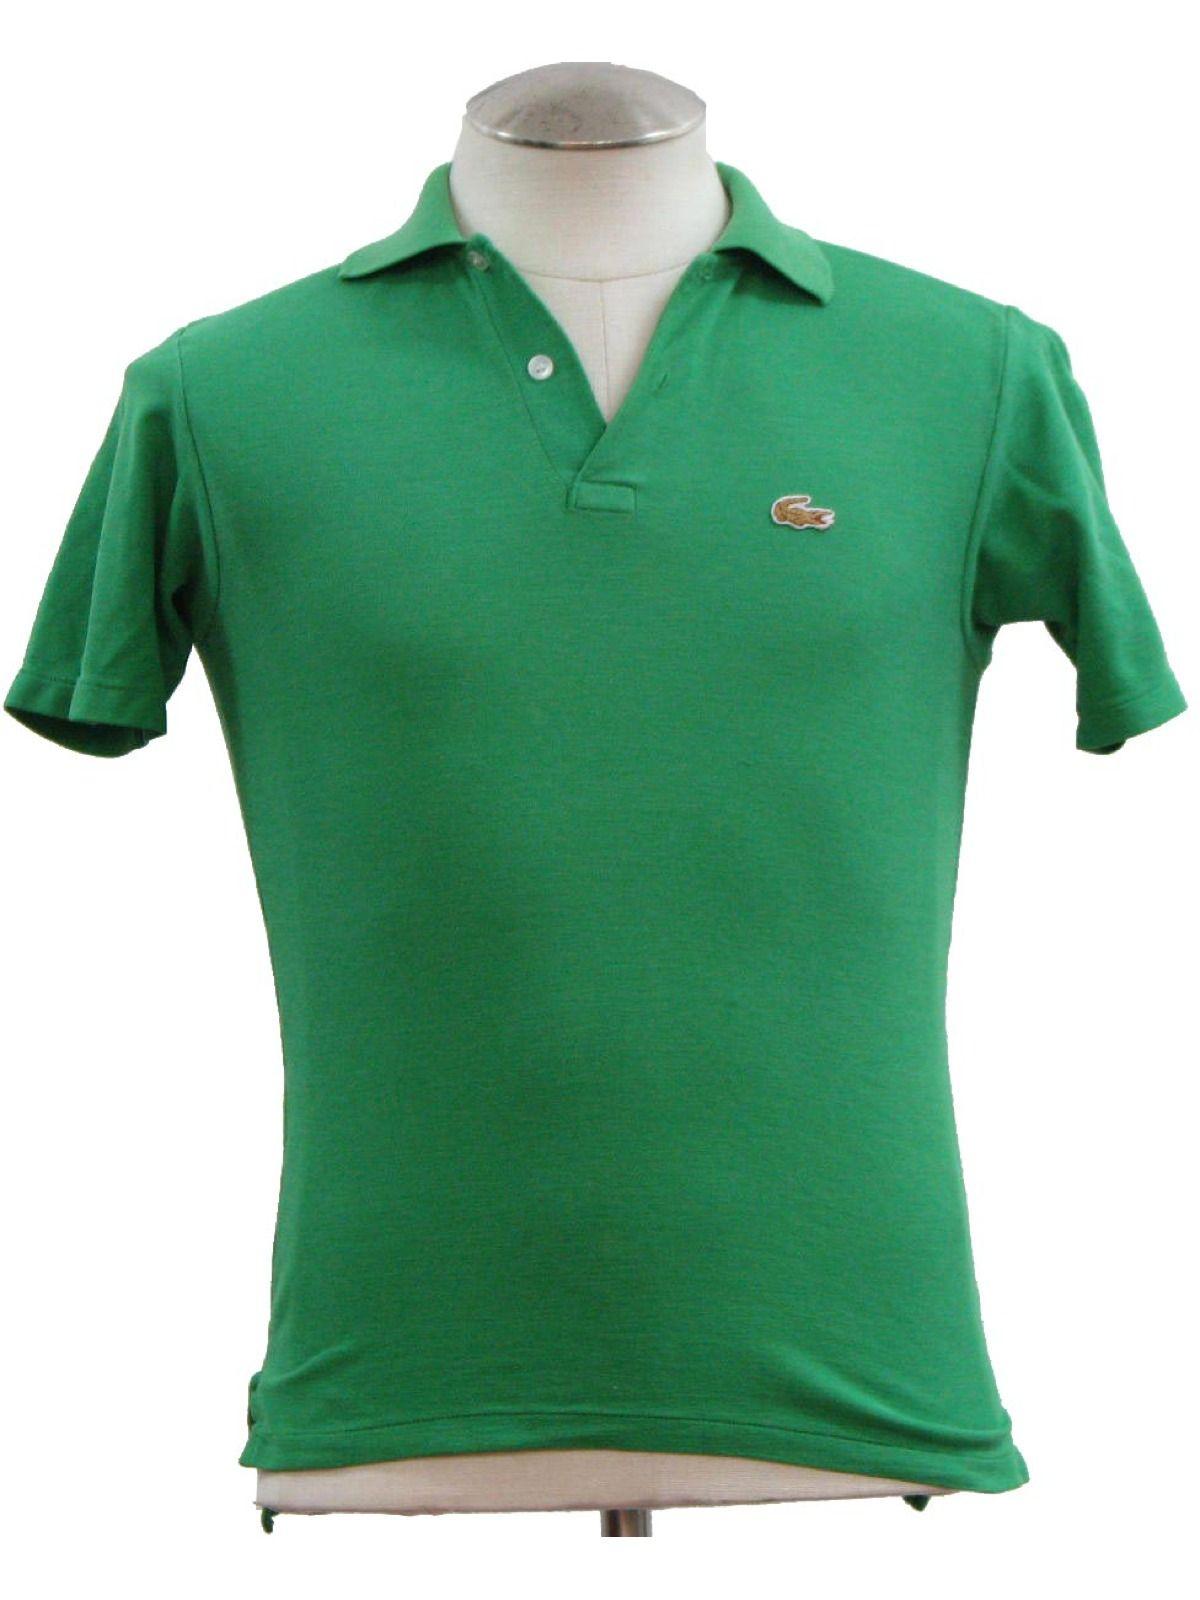 Izod Shirt Logo - Eighties Izod Shirt: 80s -Izod- Mens or boys green woven cotton and ...